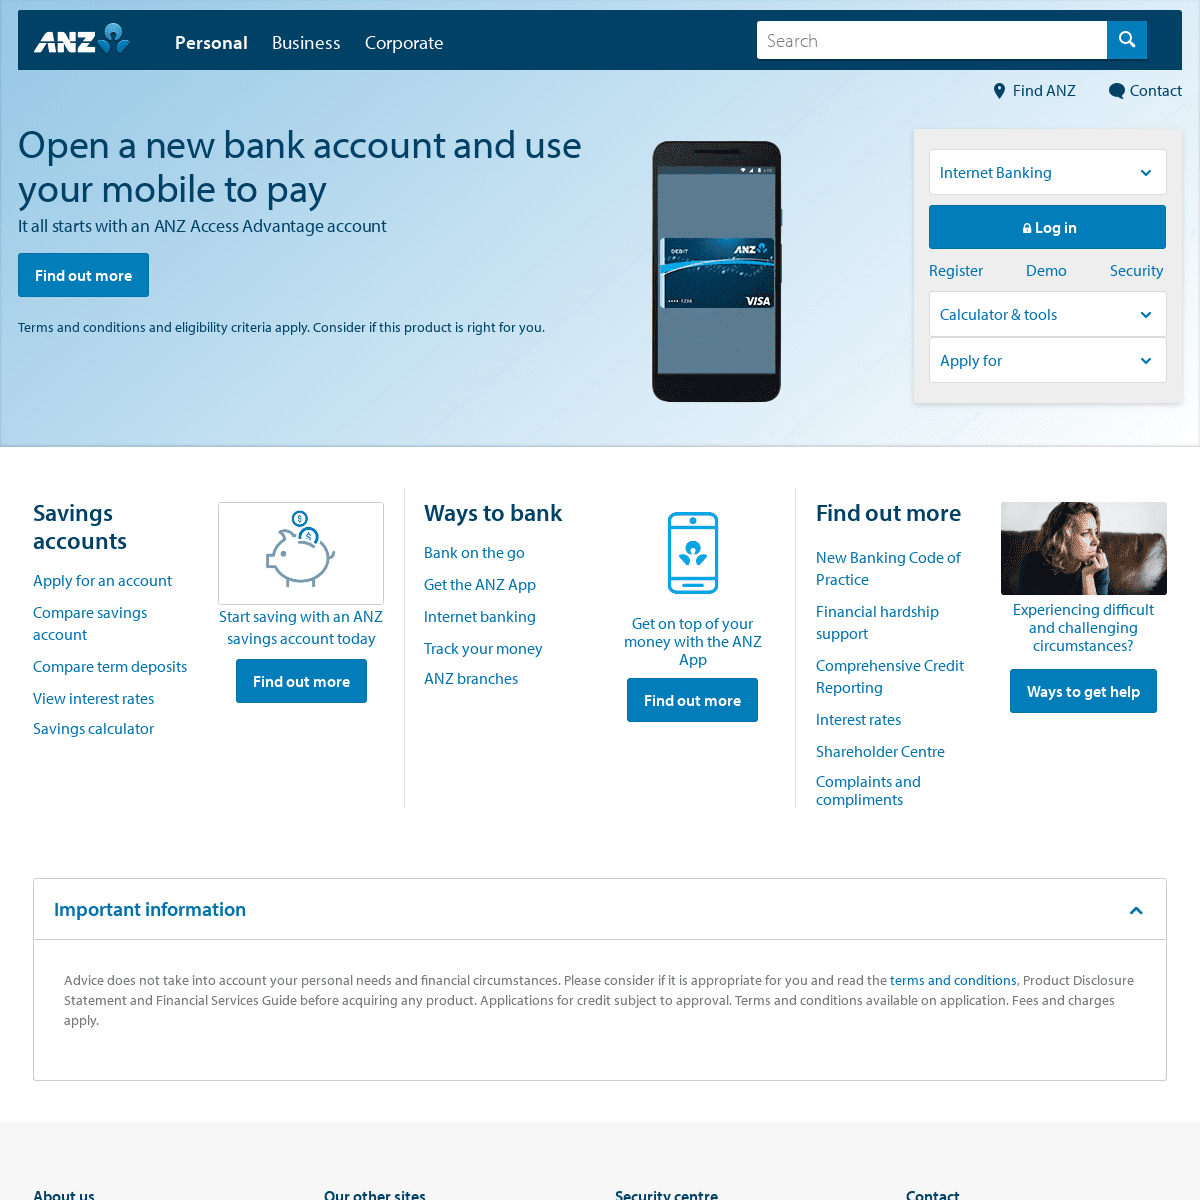 A complete backup of anz.com.au